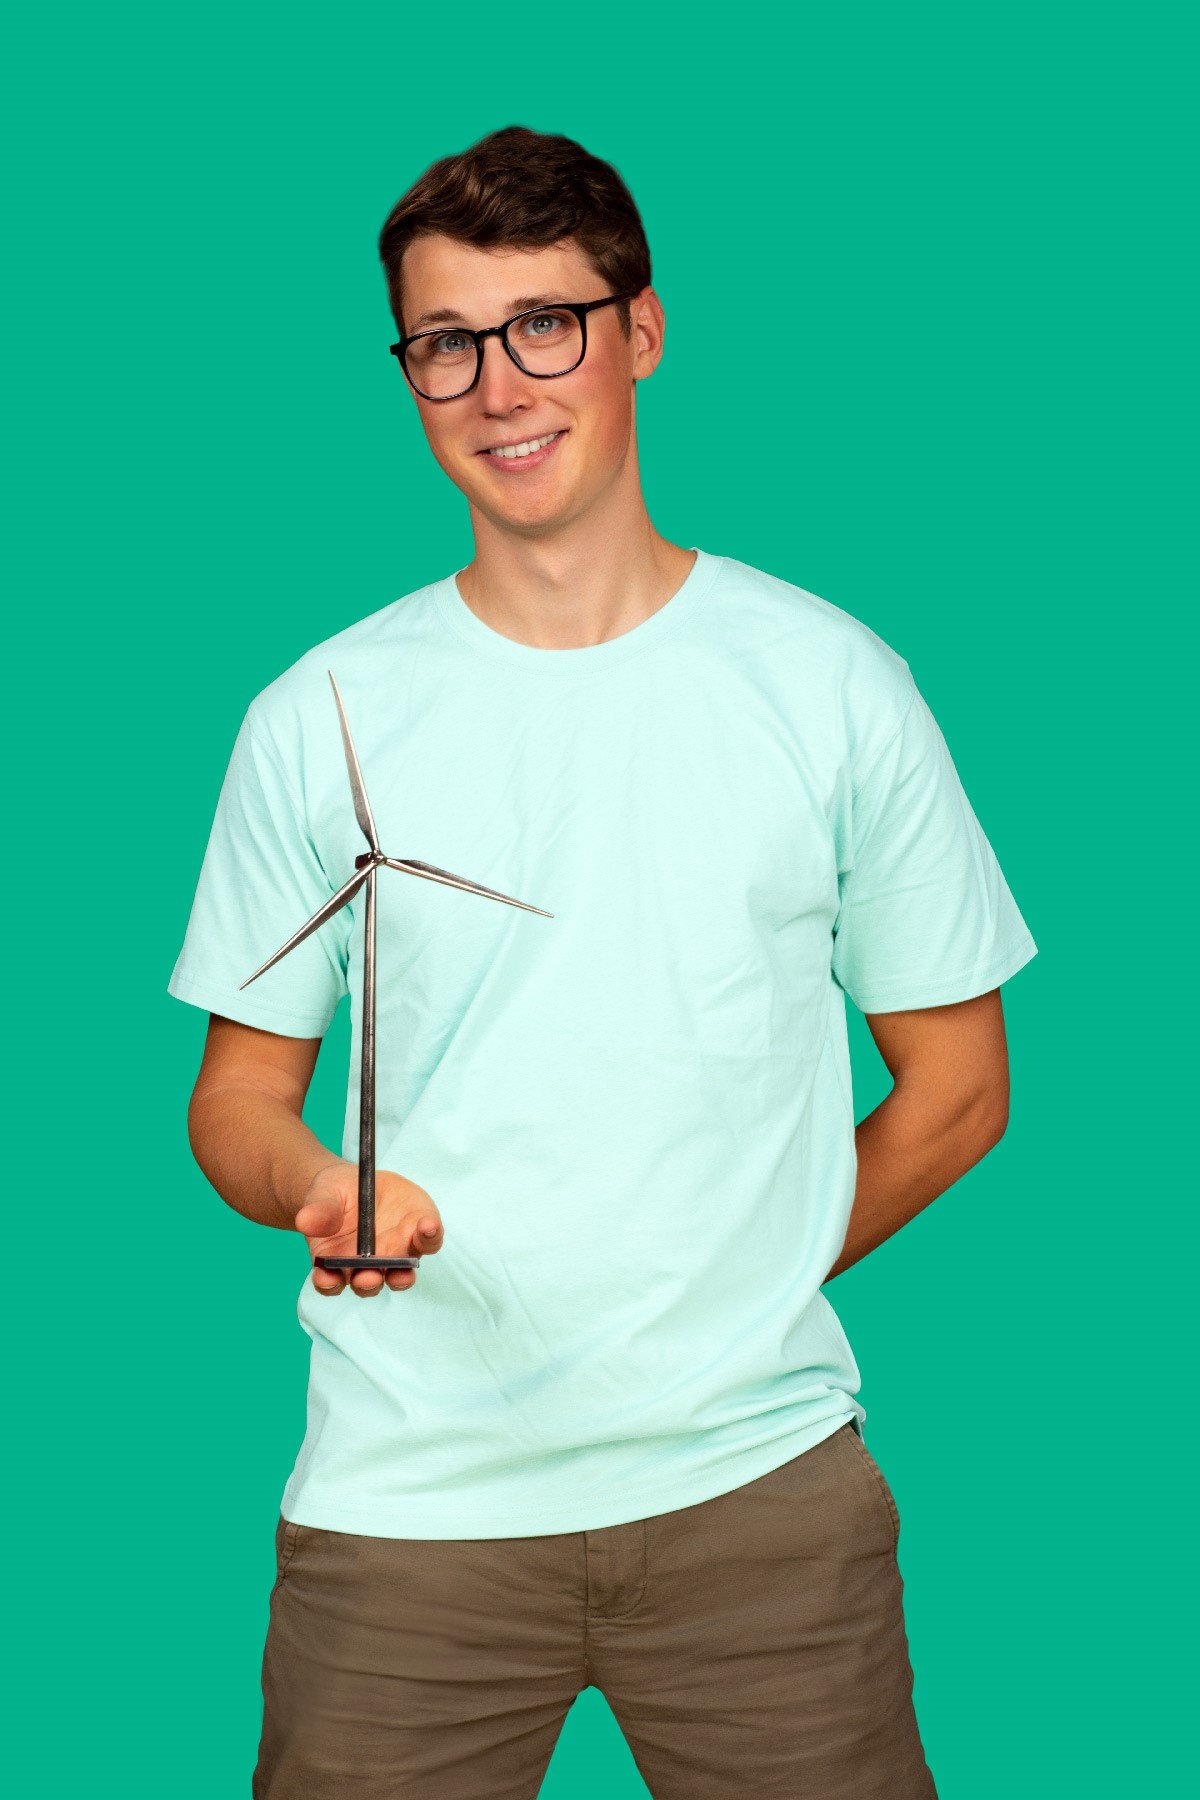 Jens D in green shirt holding a mini wind mill